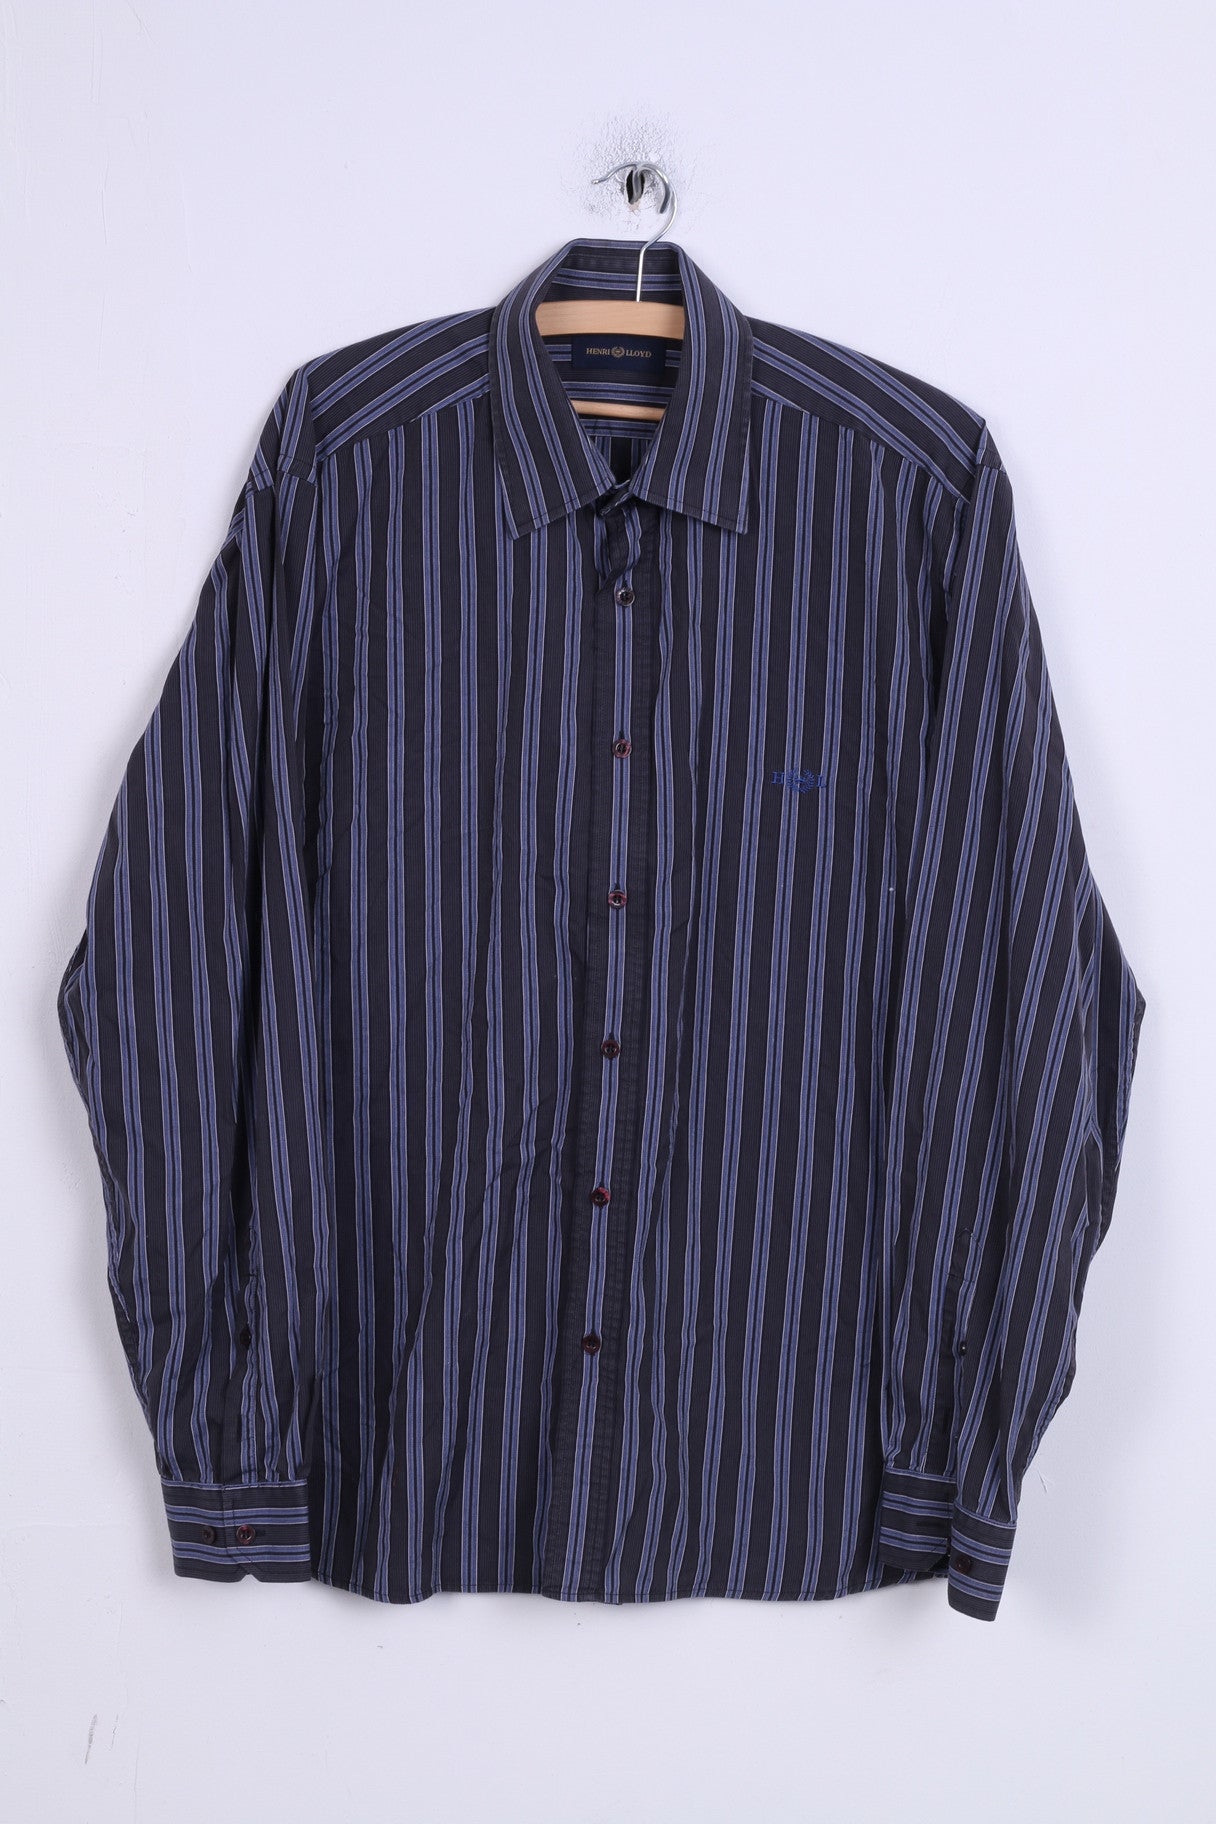 HENRI LLOYD Mens XL Casual Shirt Stripes Navy Blue Cotton Detailed Buttons